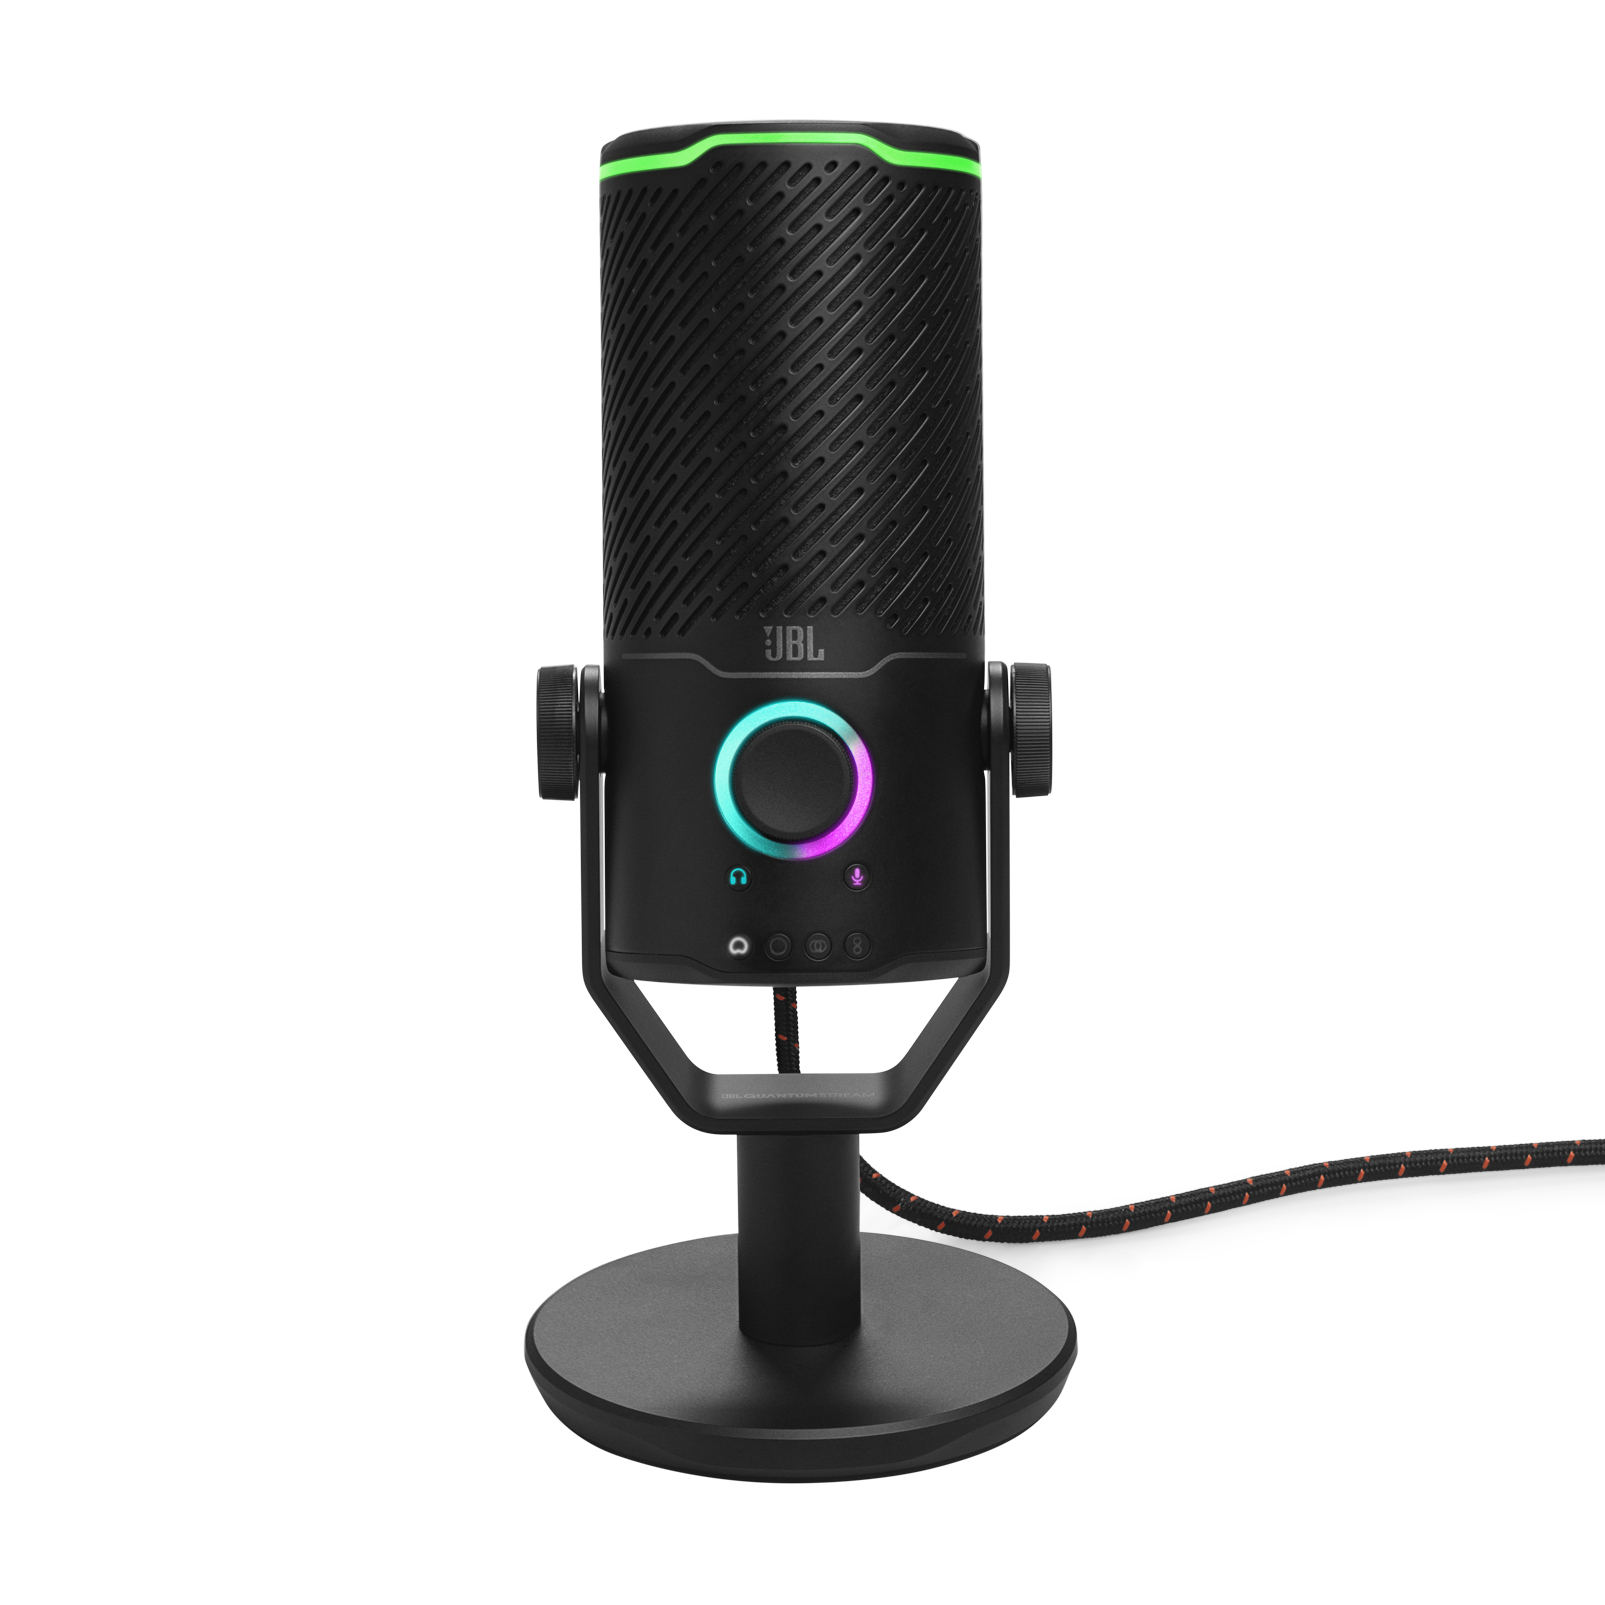 JBL ora produce microfoni per broadcast